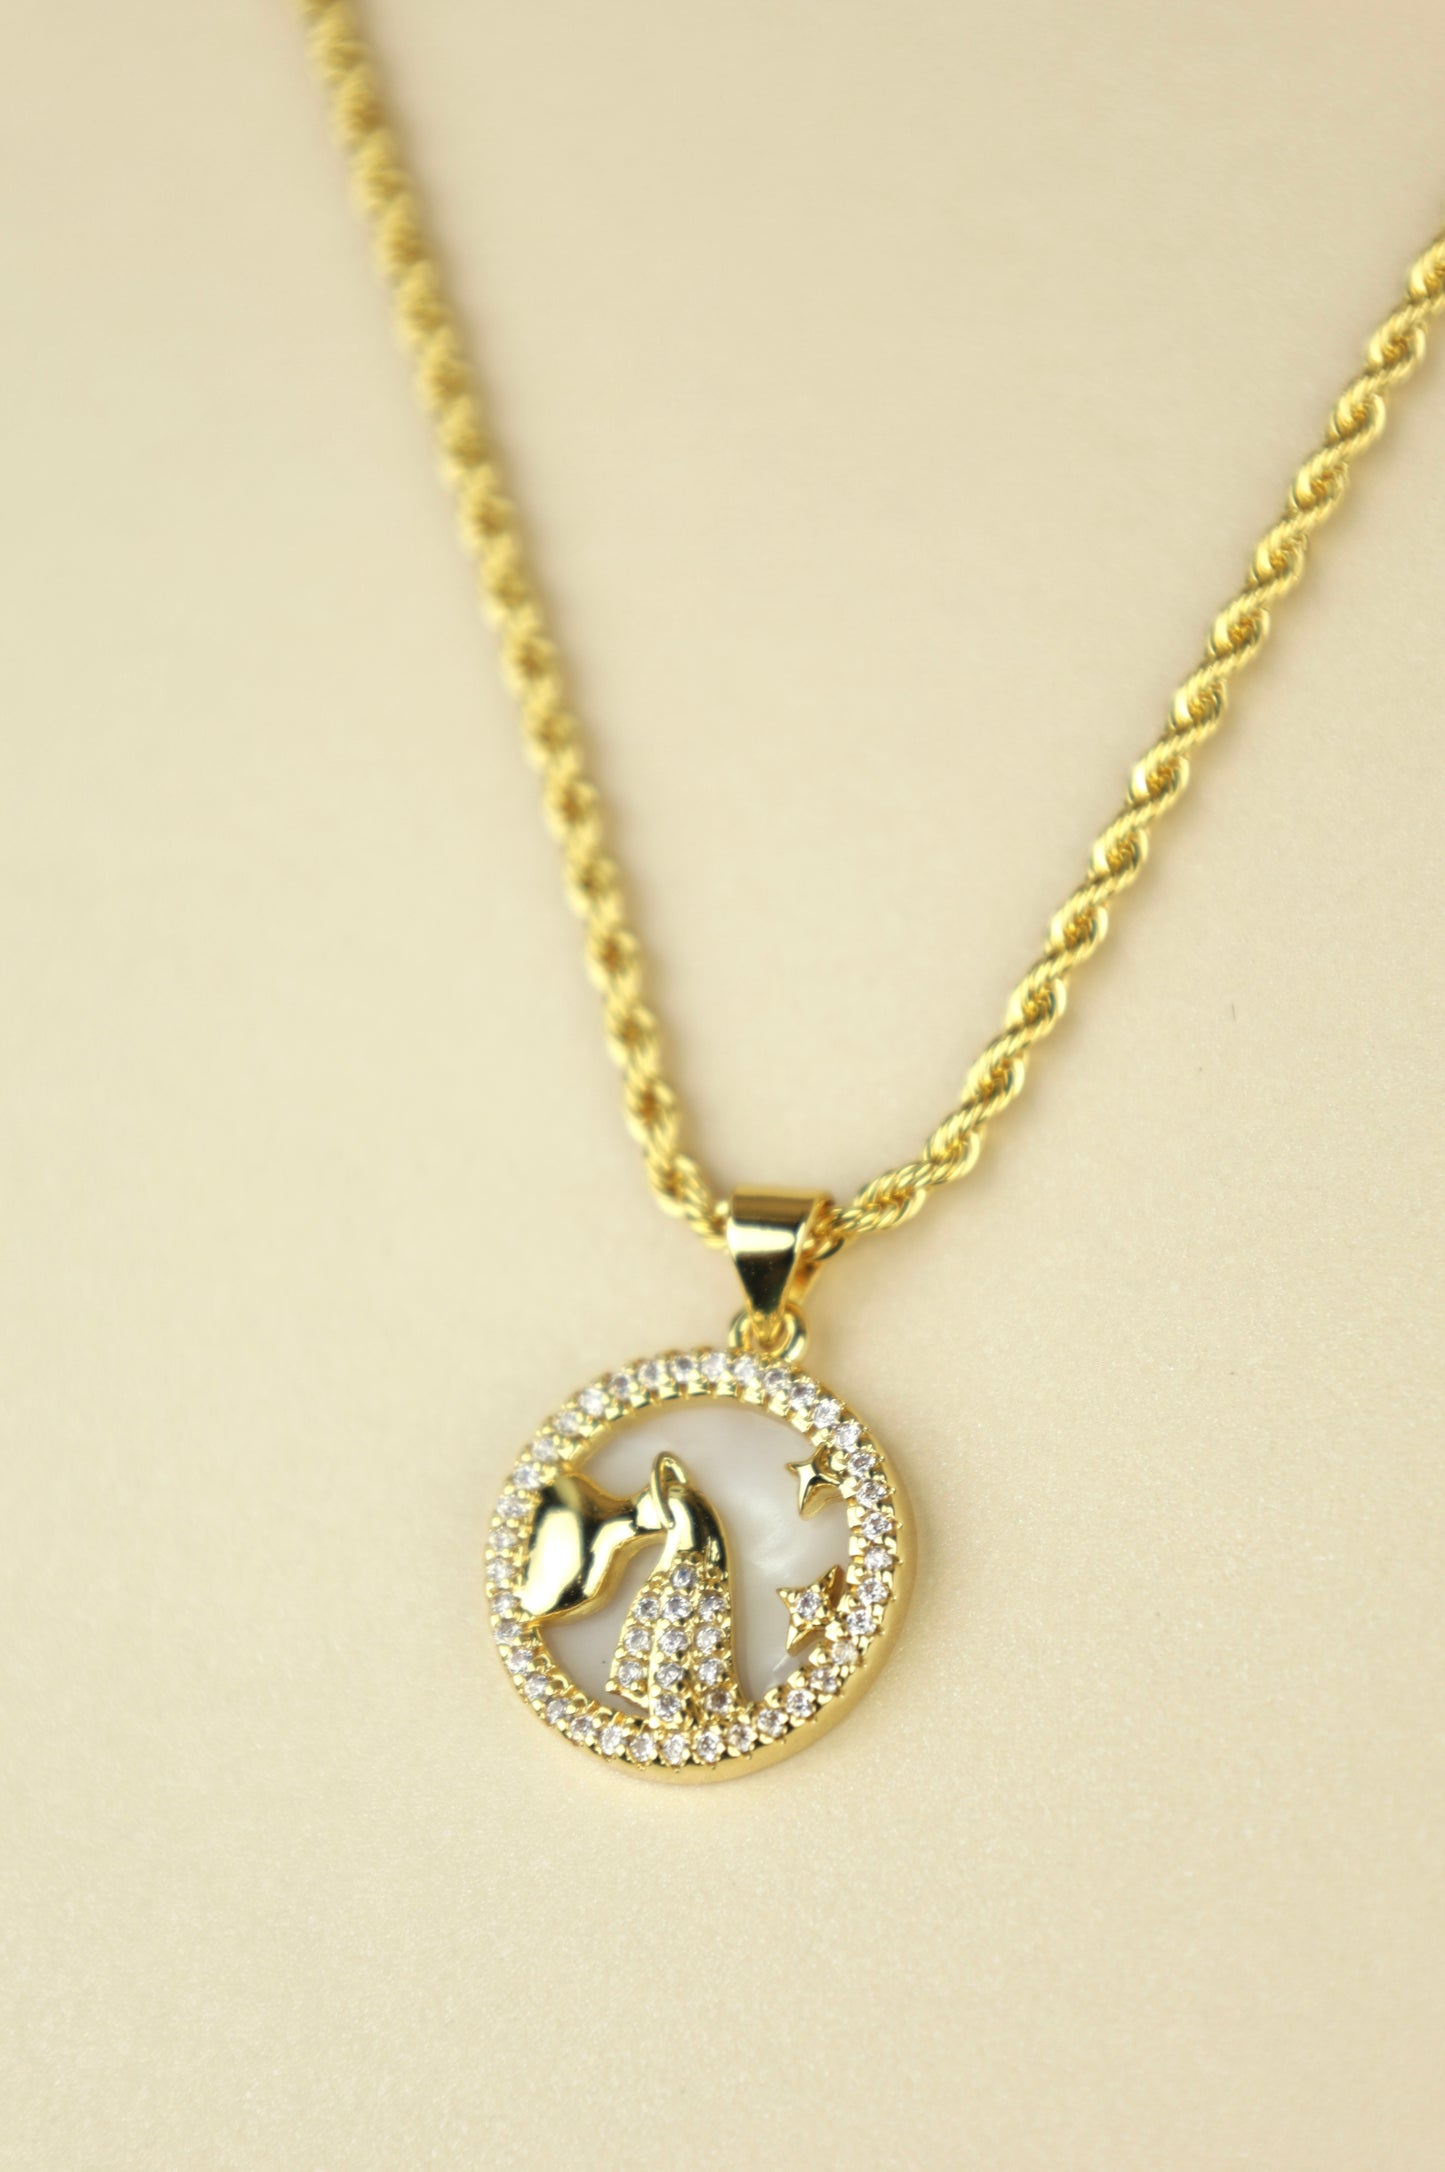 Aquarius zodiac necklace in gold